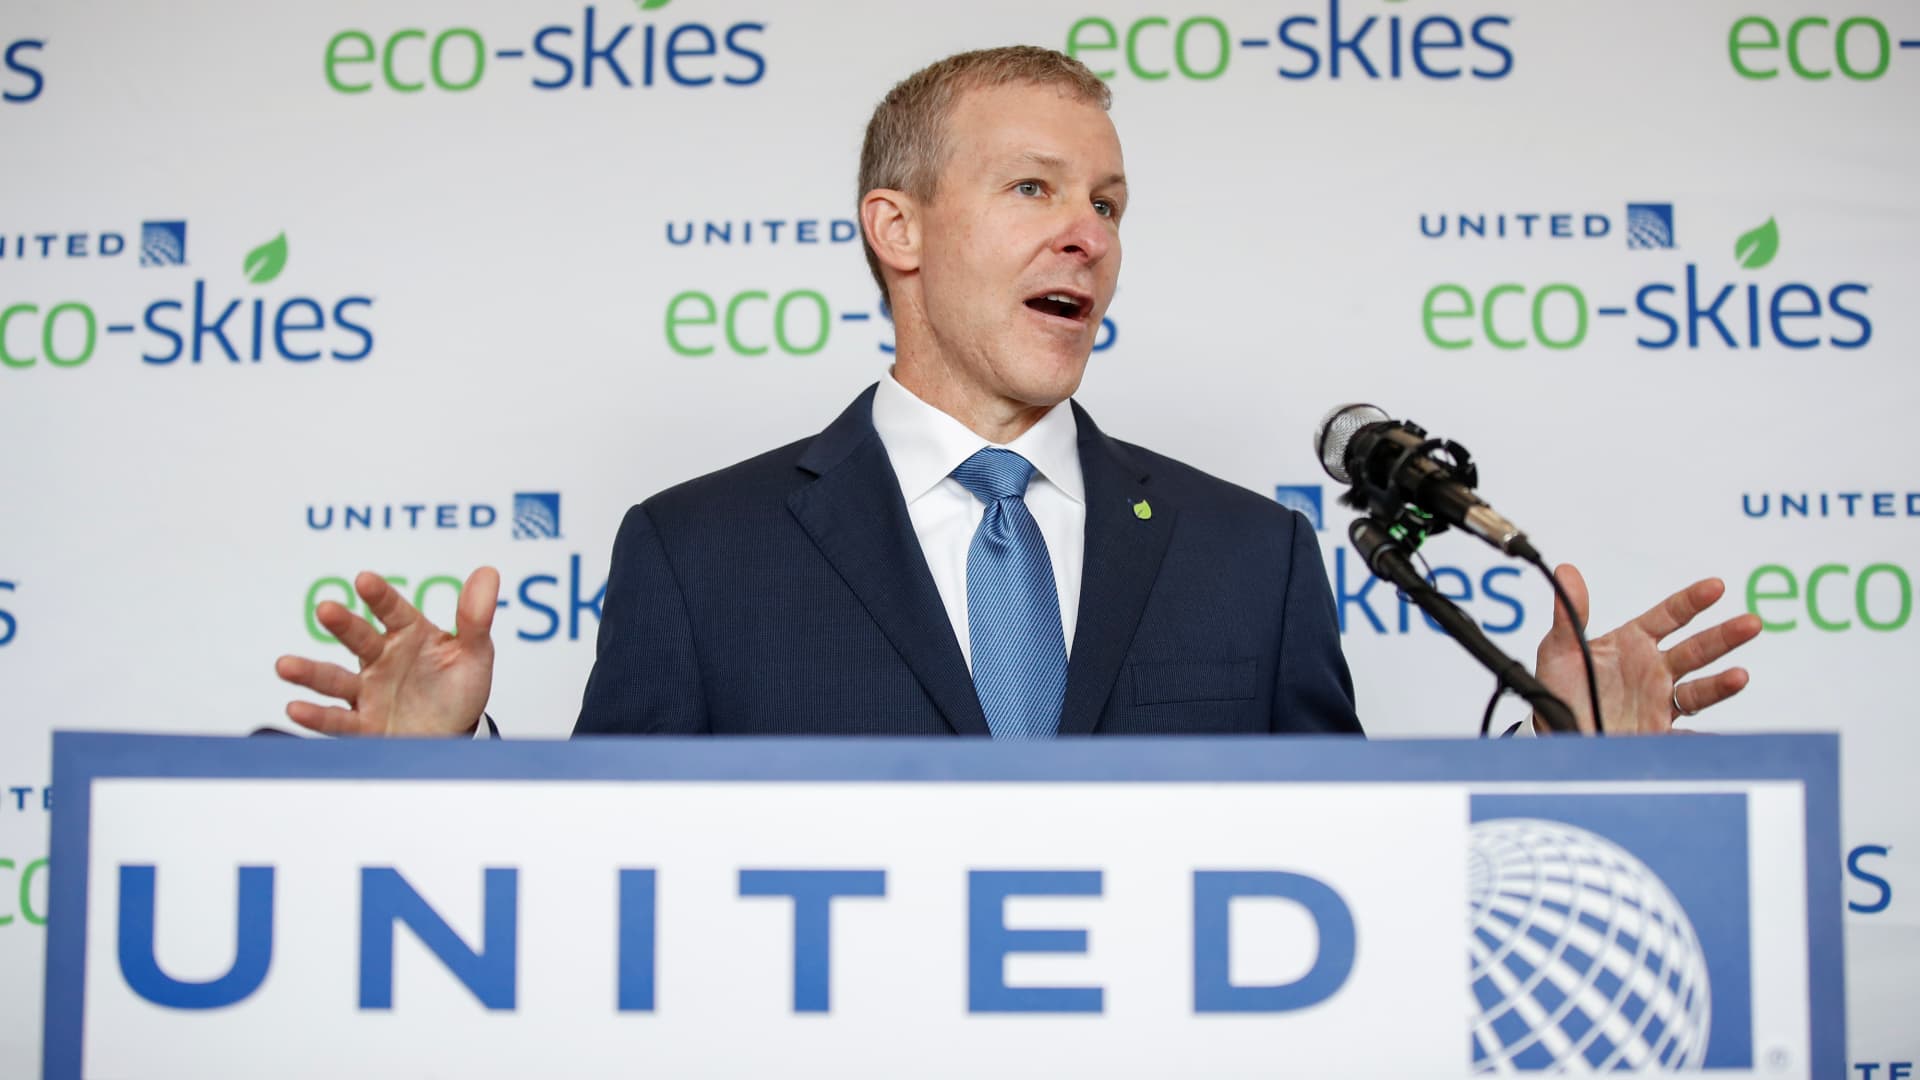 United CEO kickstarts Airbus talks amid Boeing delays, resources say